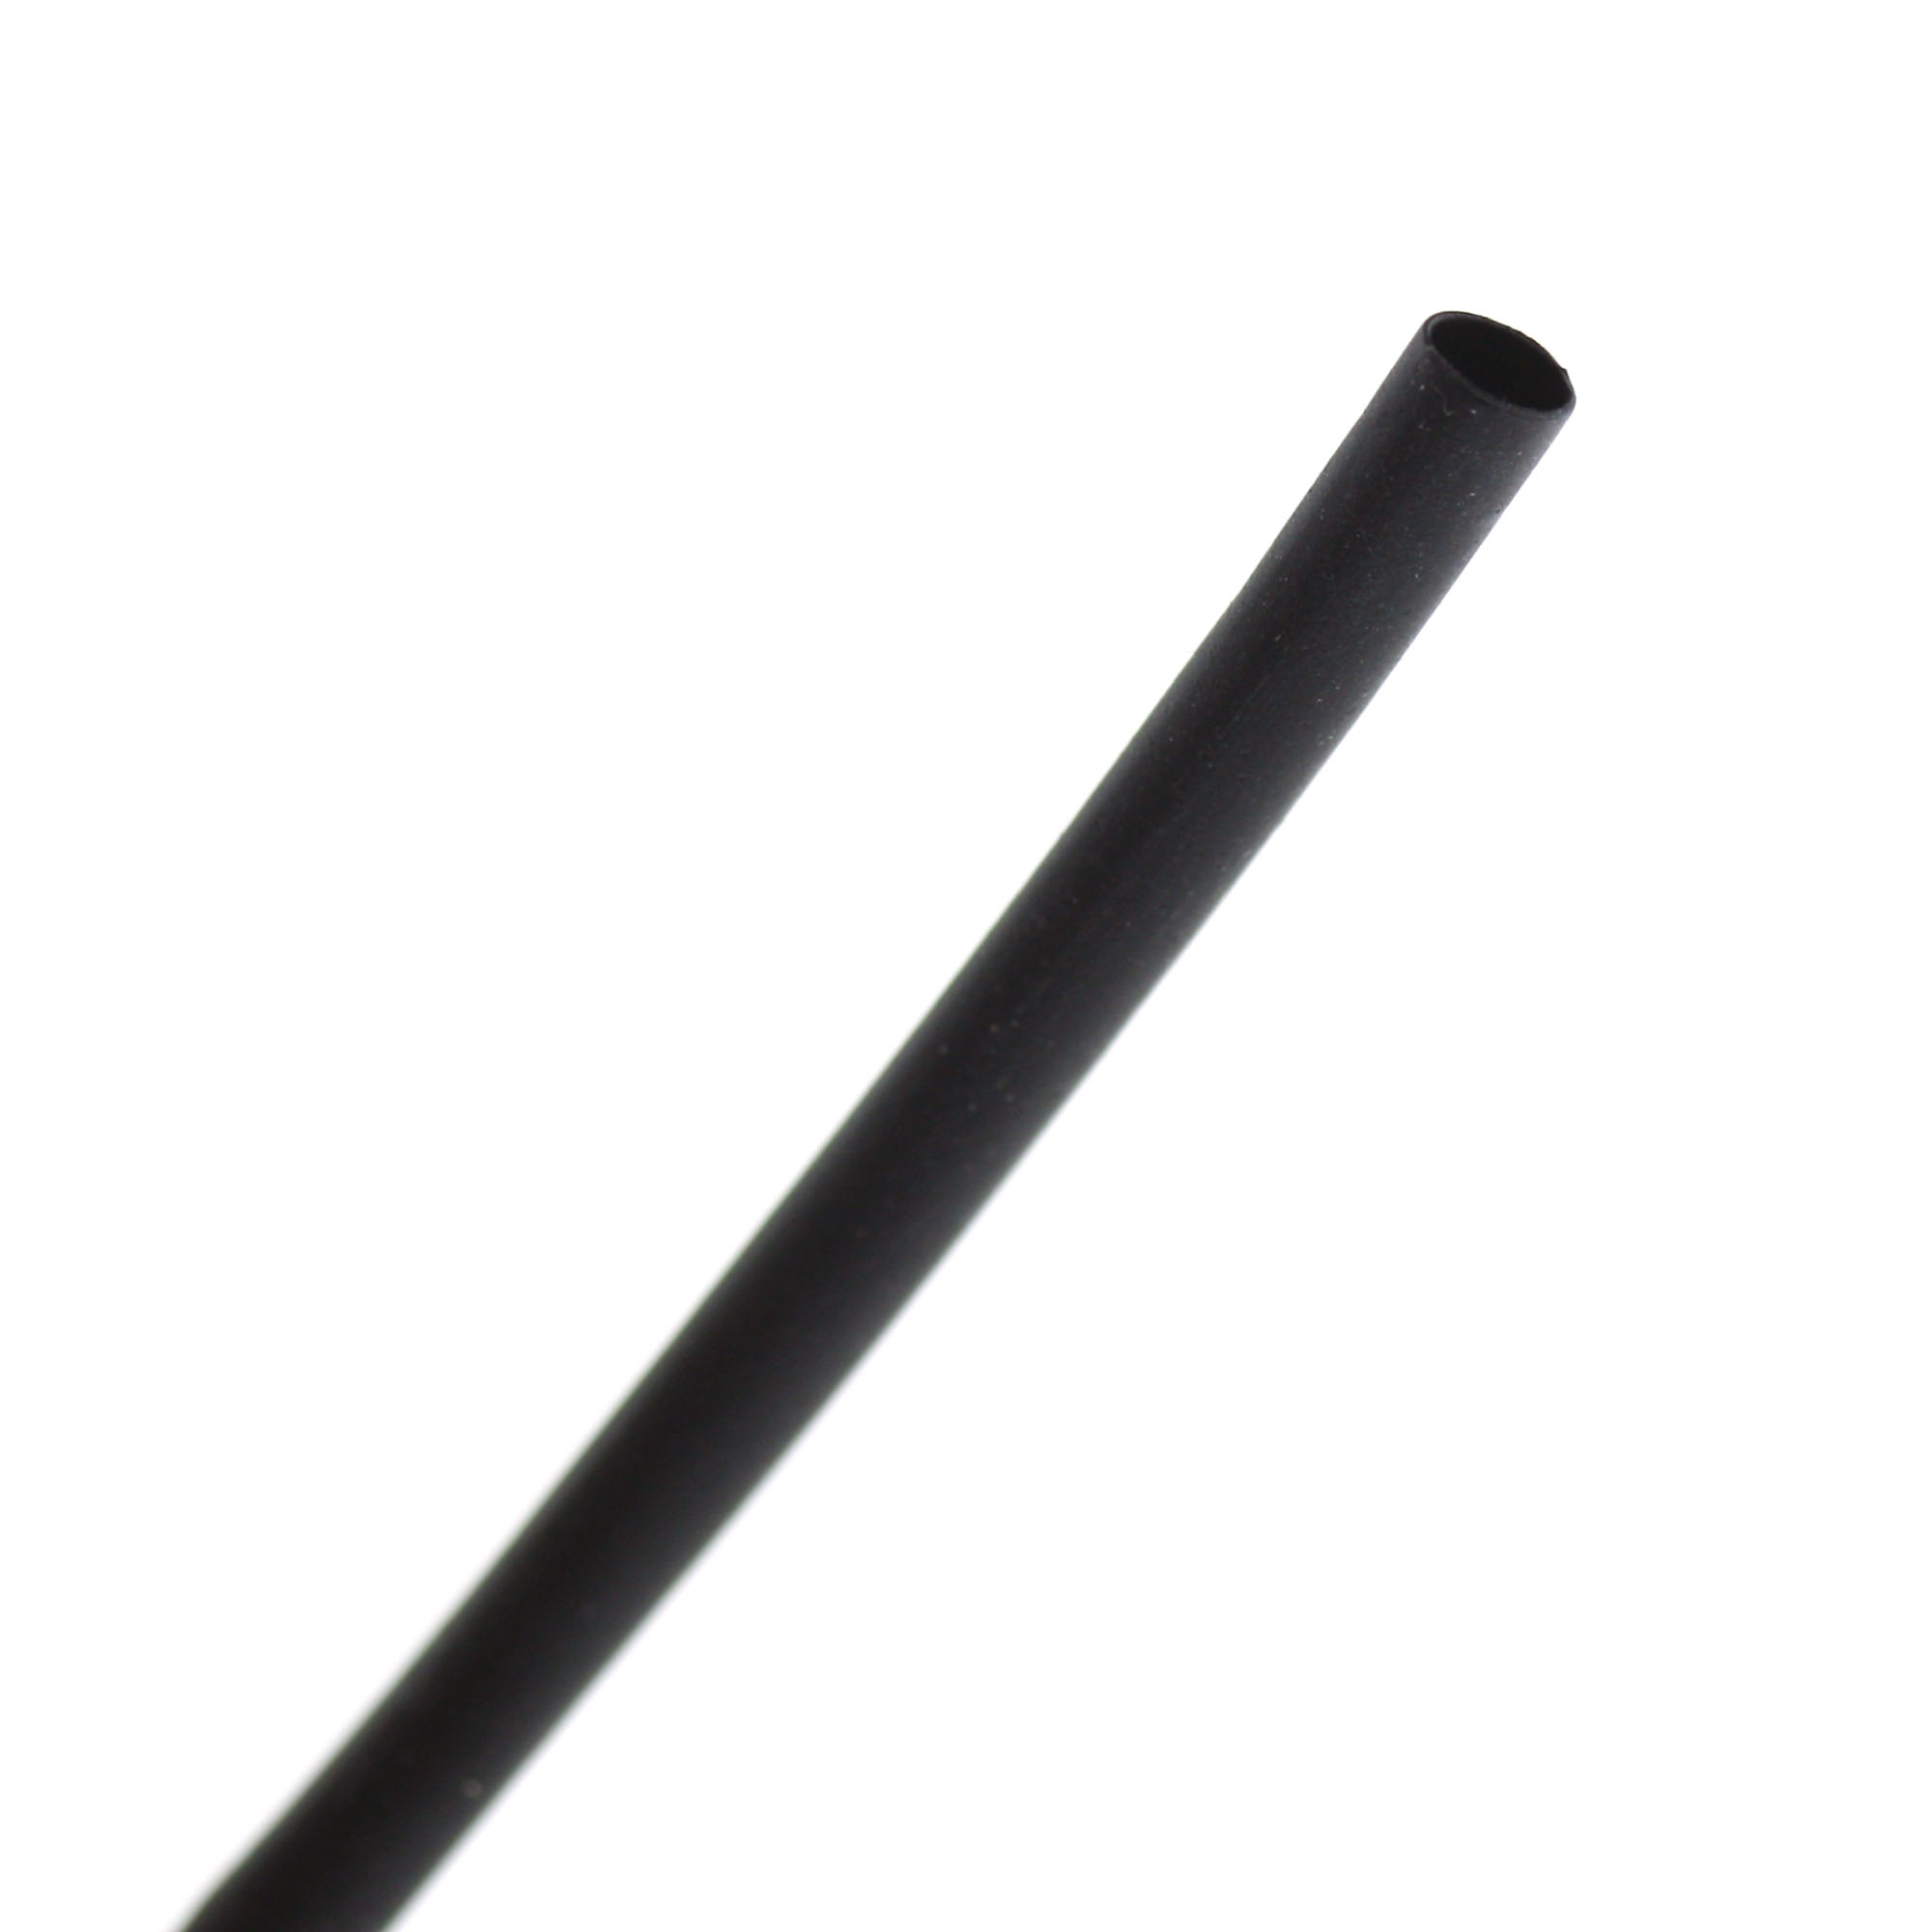 Heat shrink tube 3:1 / 3,0-1,0mm, 10m, black